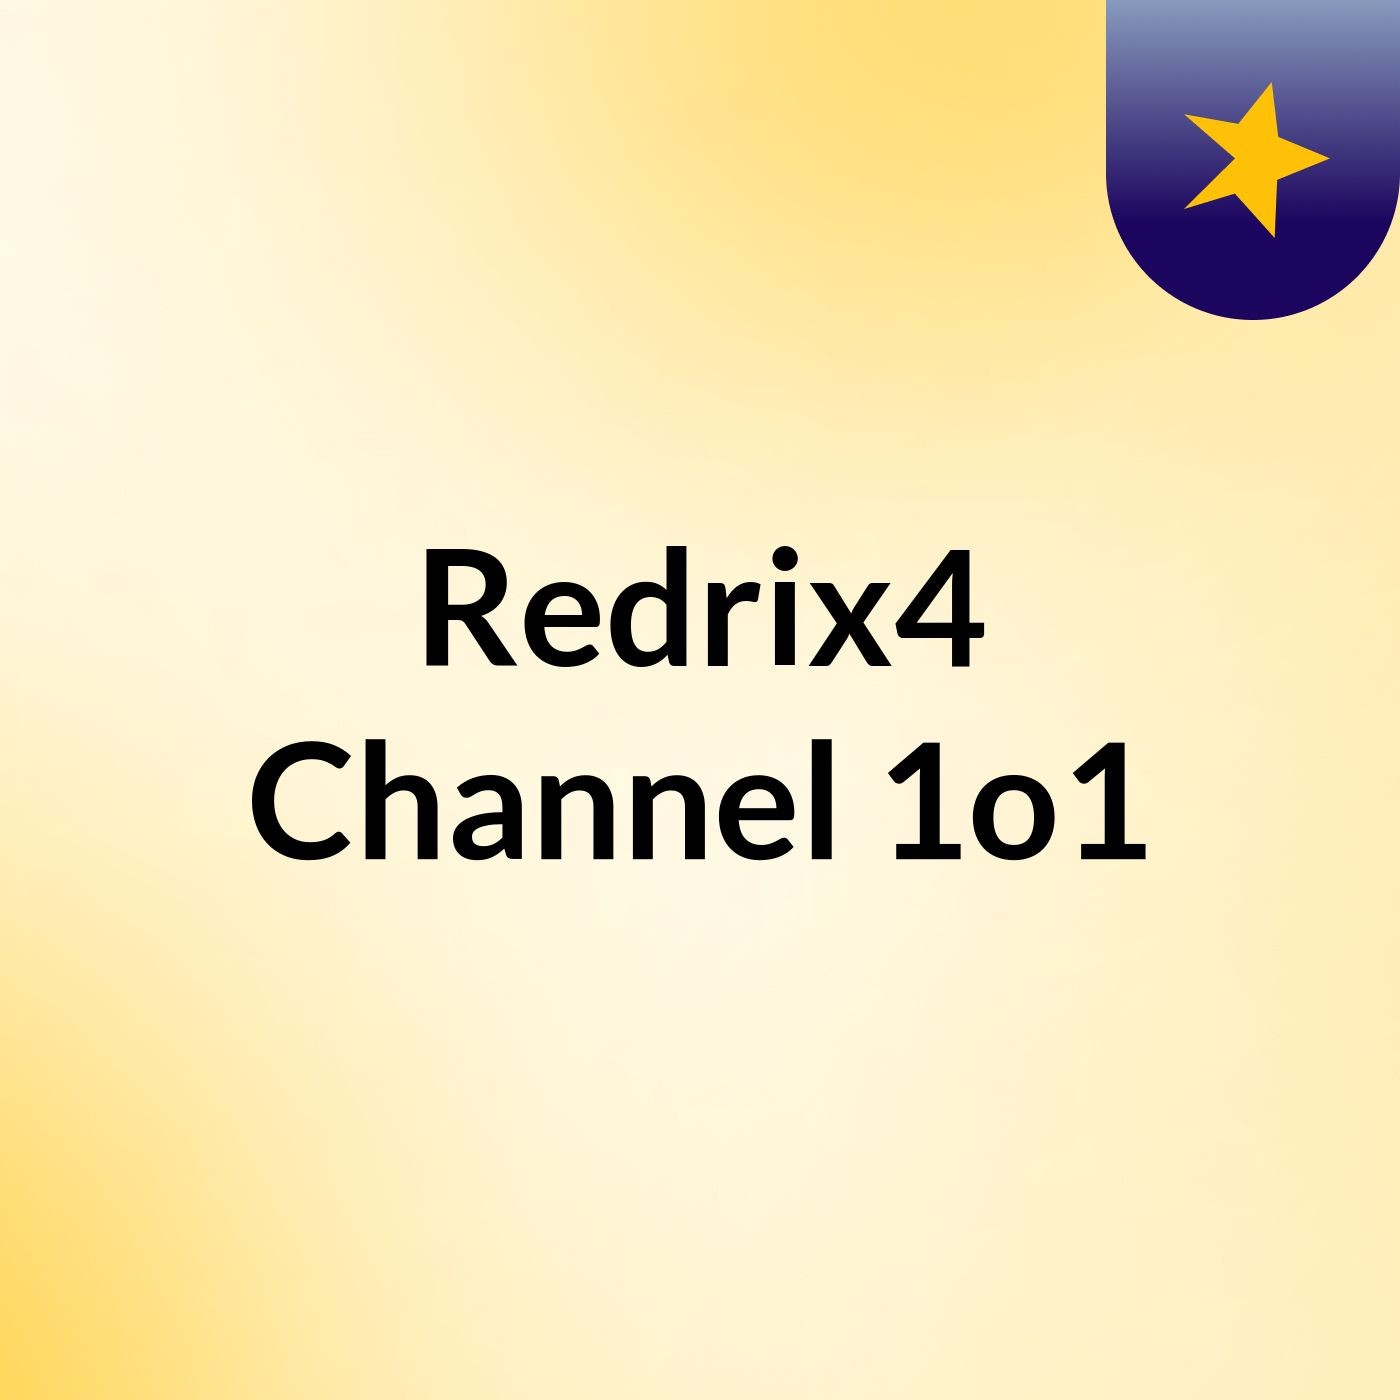 Redrix4 Channel 1o1